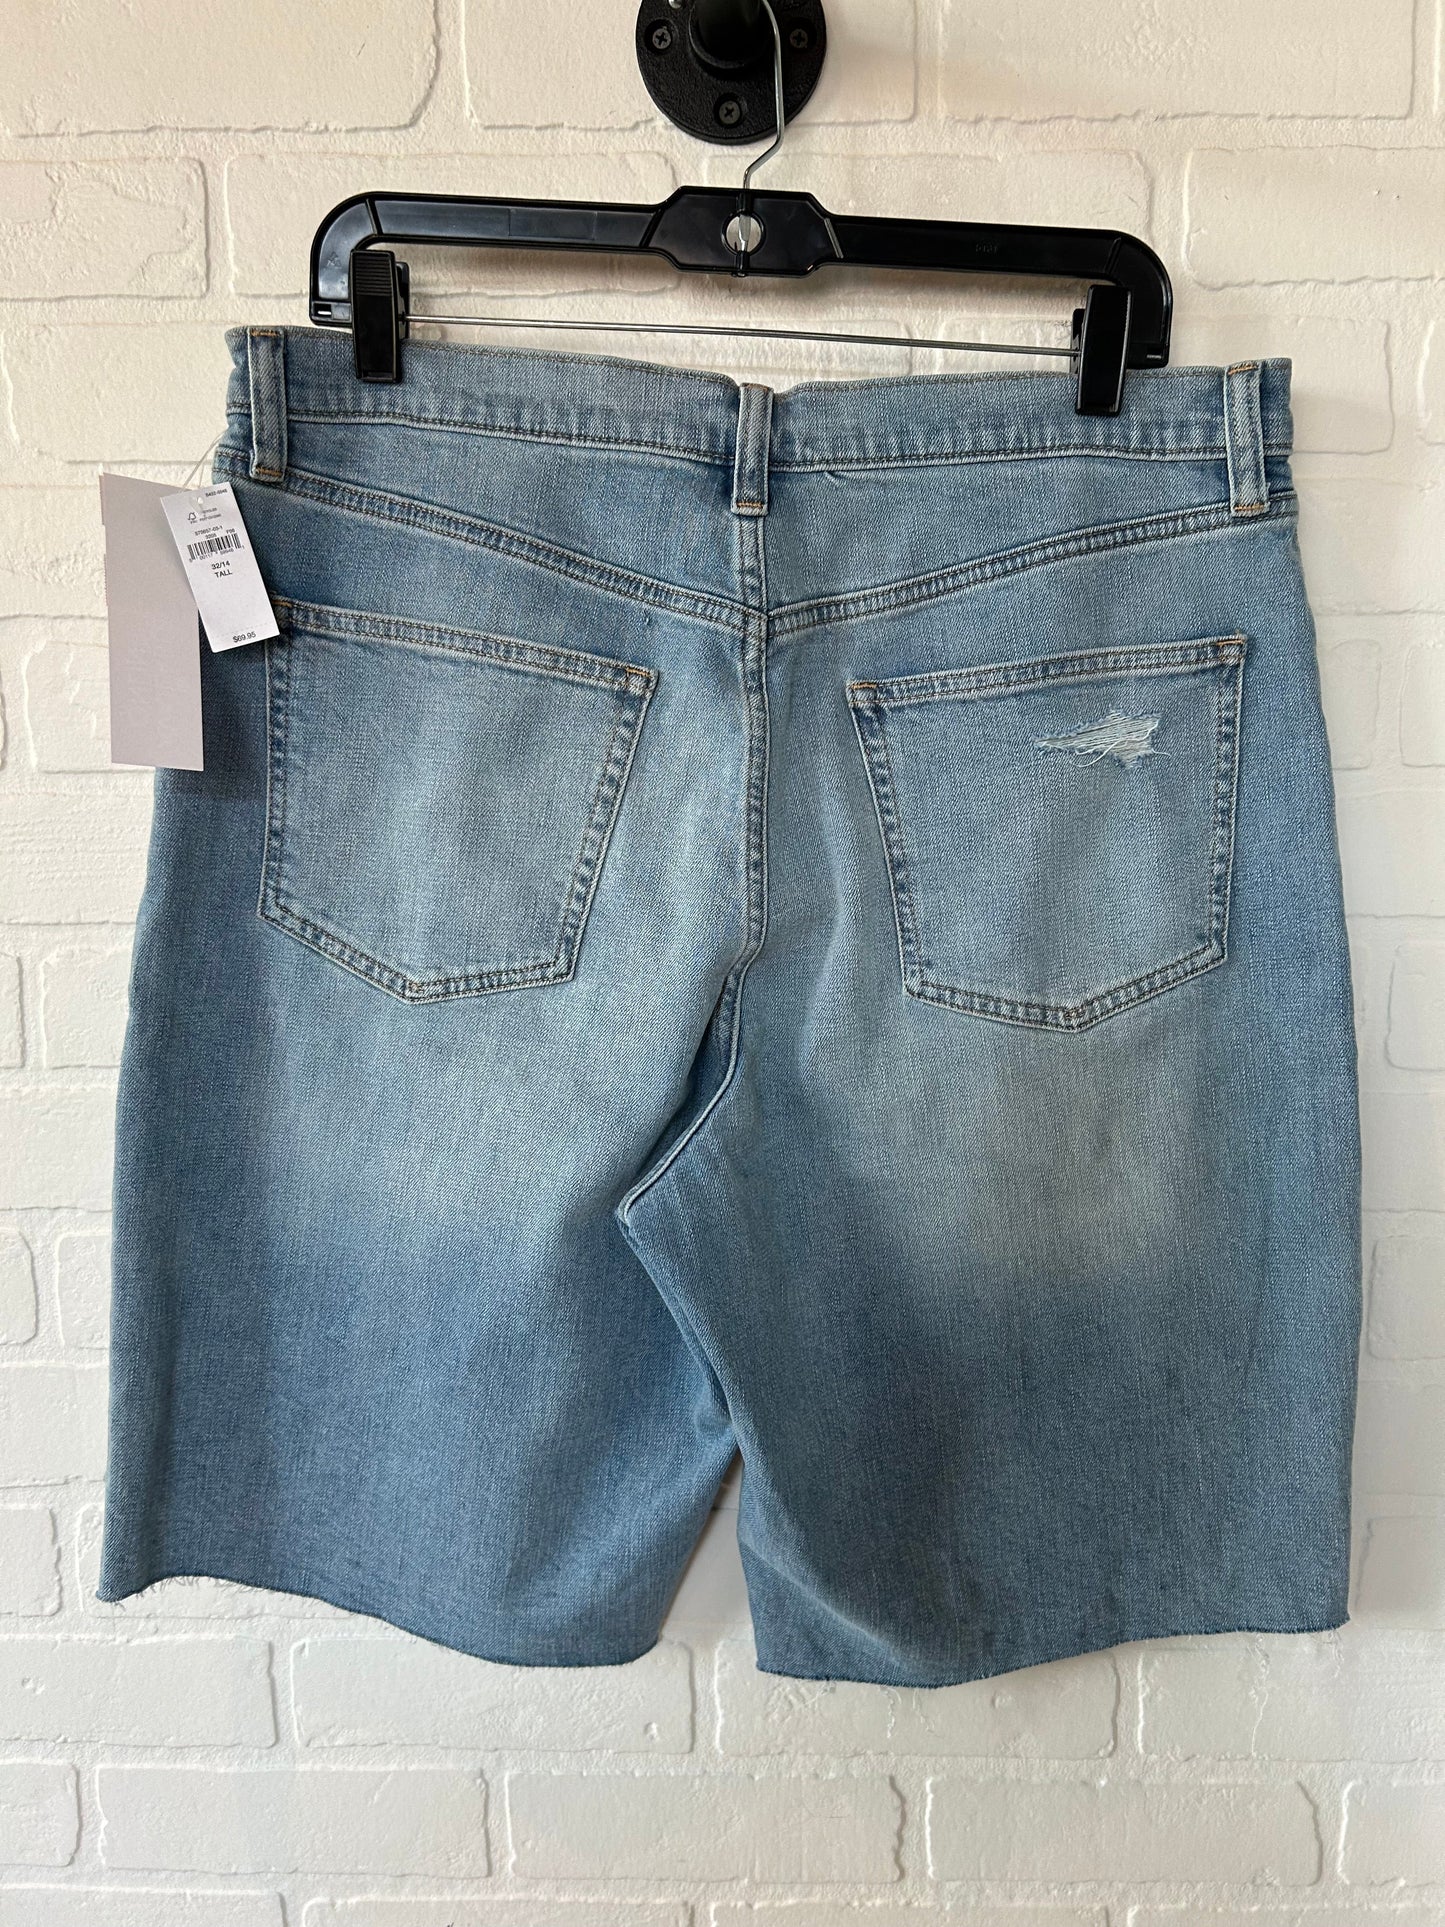 Blue Denim Shorts Gap, Size 14tall